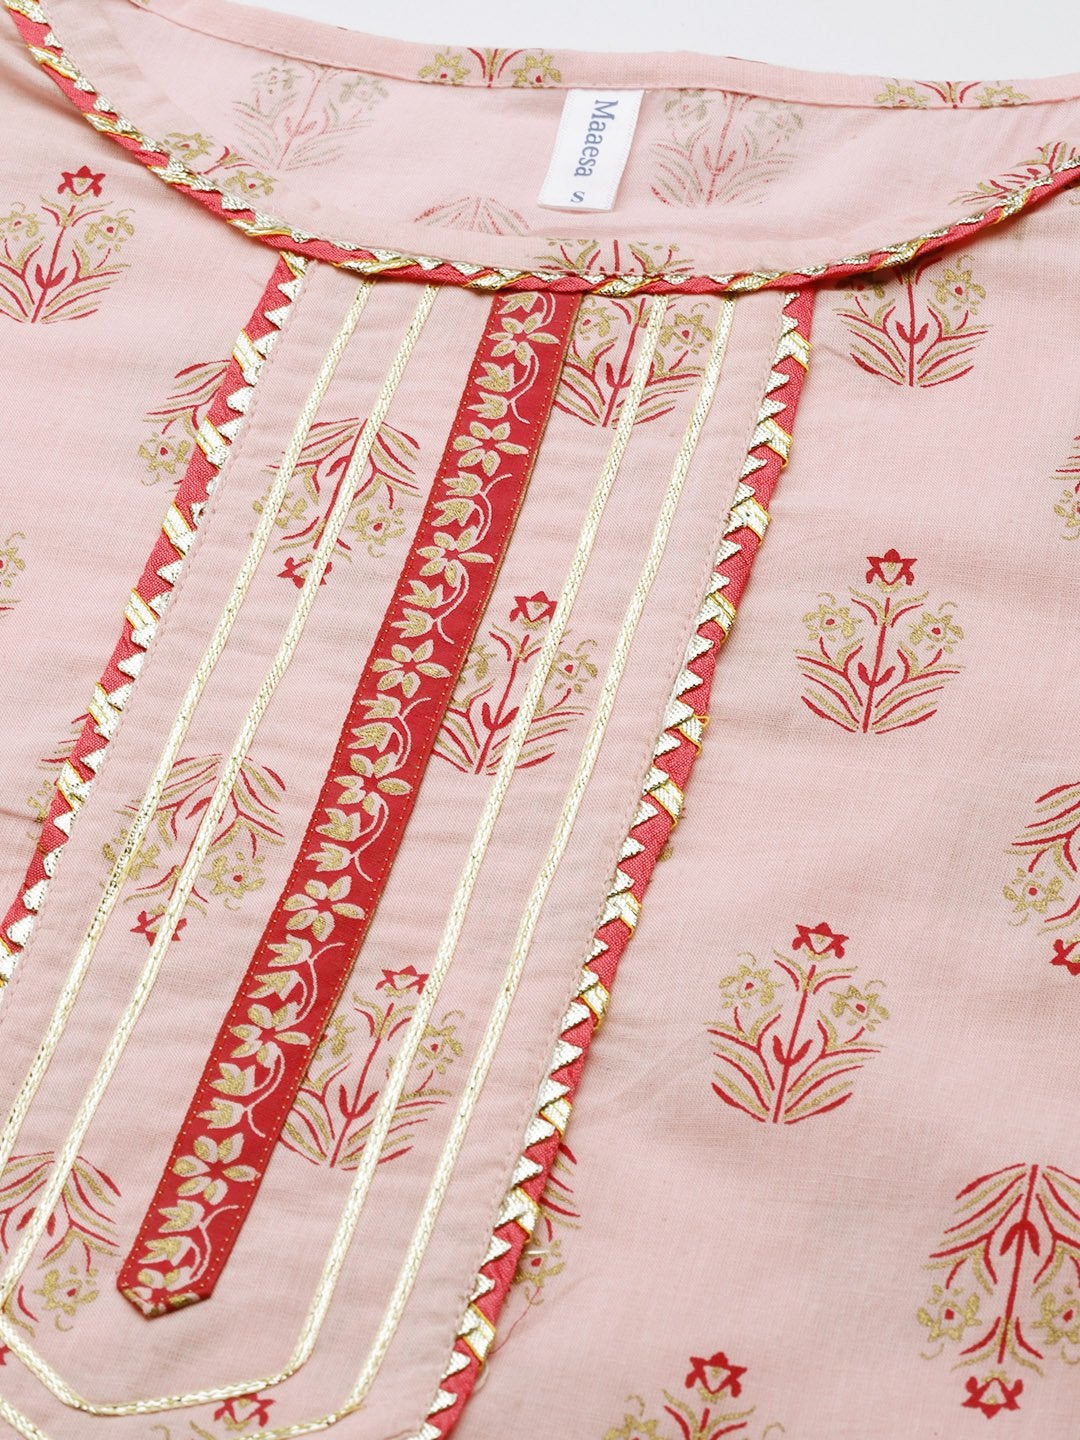 Women's Pink Cotton Gotta Detailing Anarkali - Maaesa